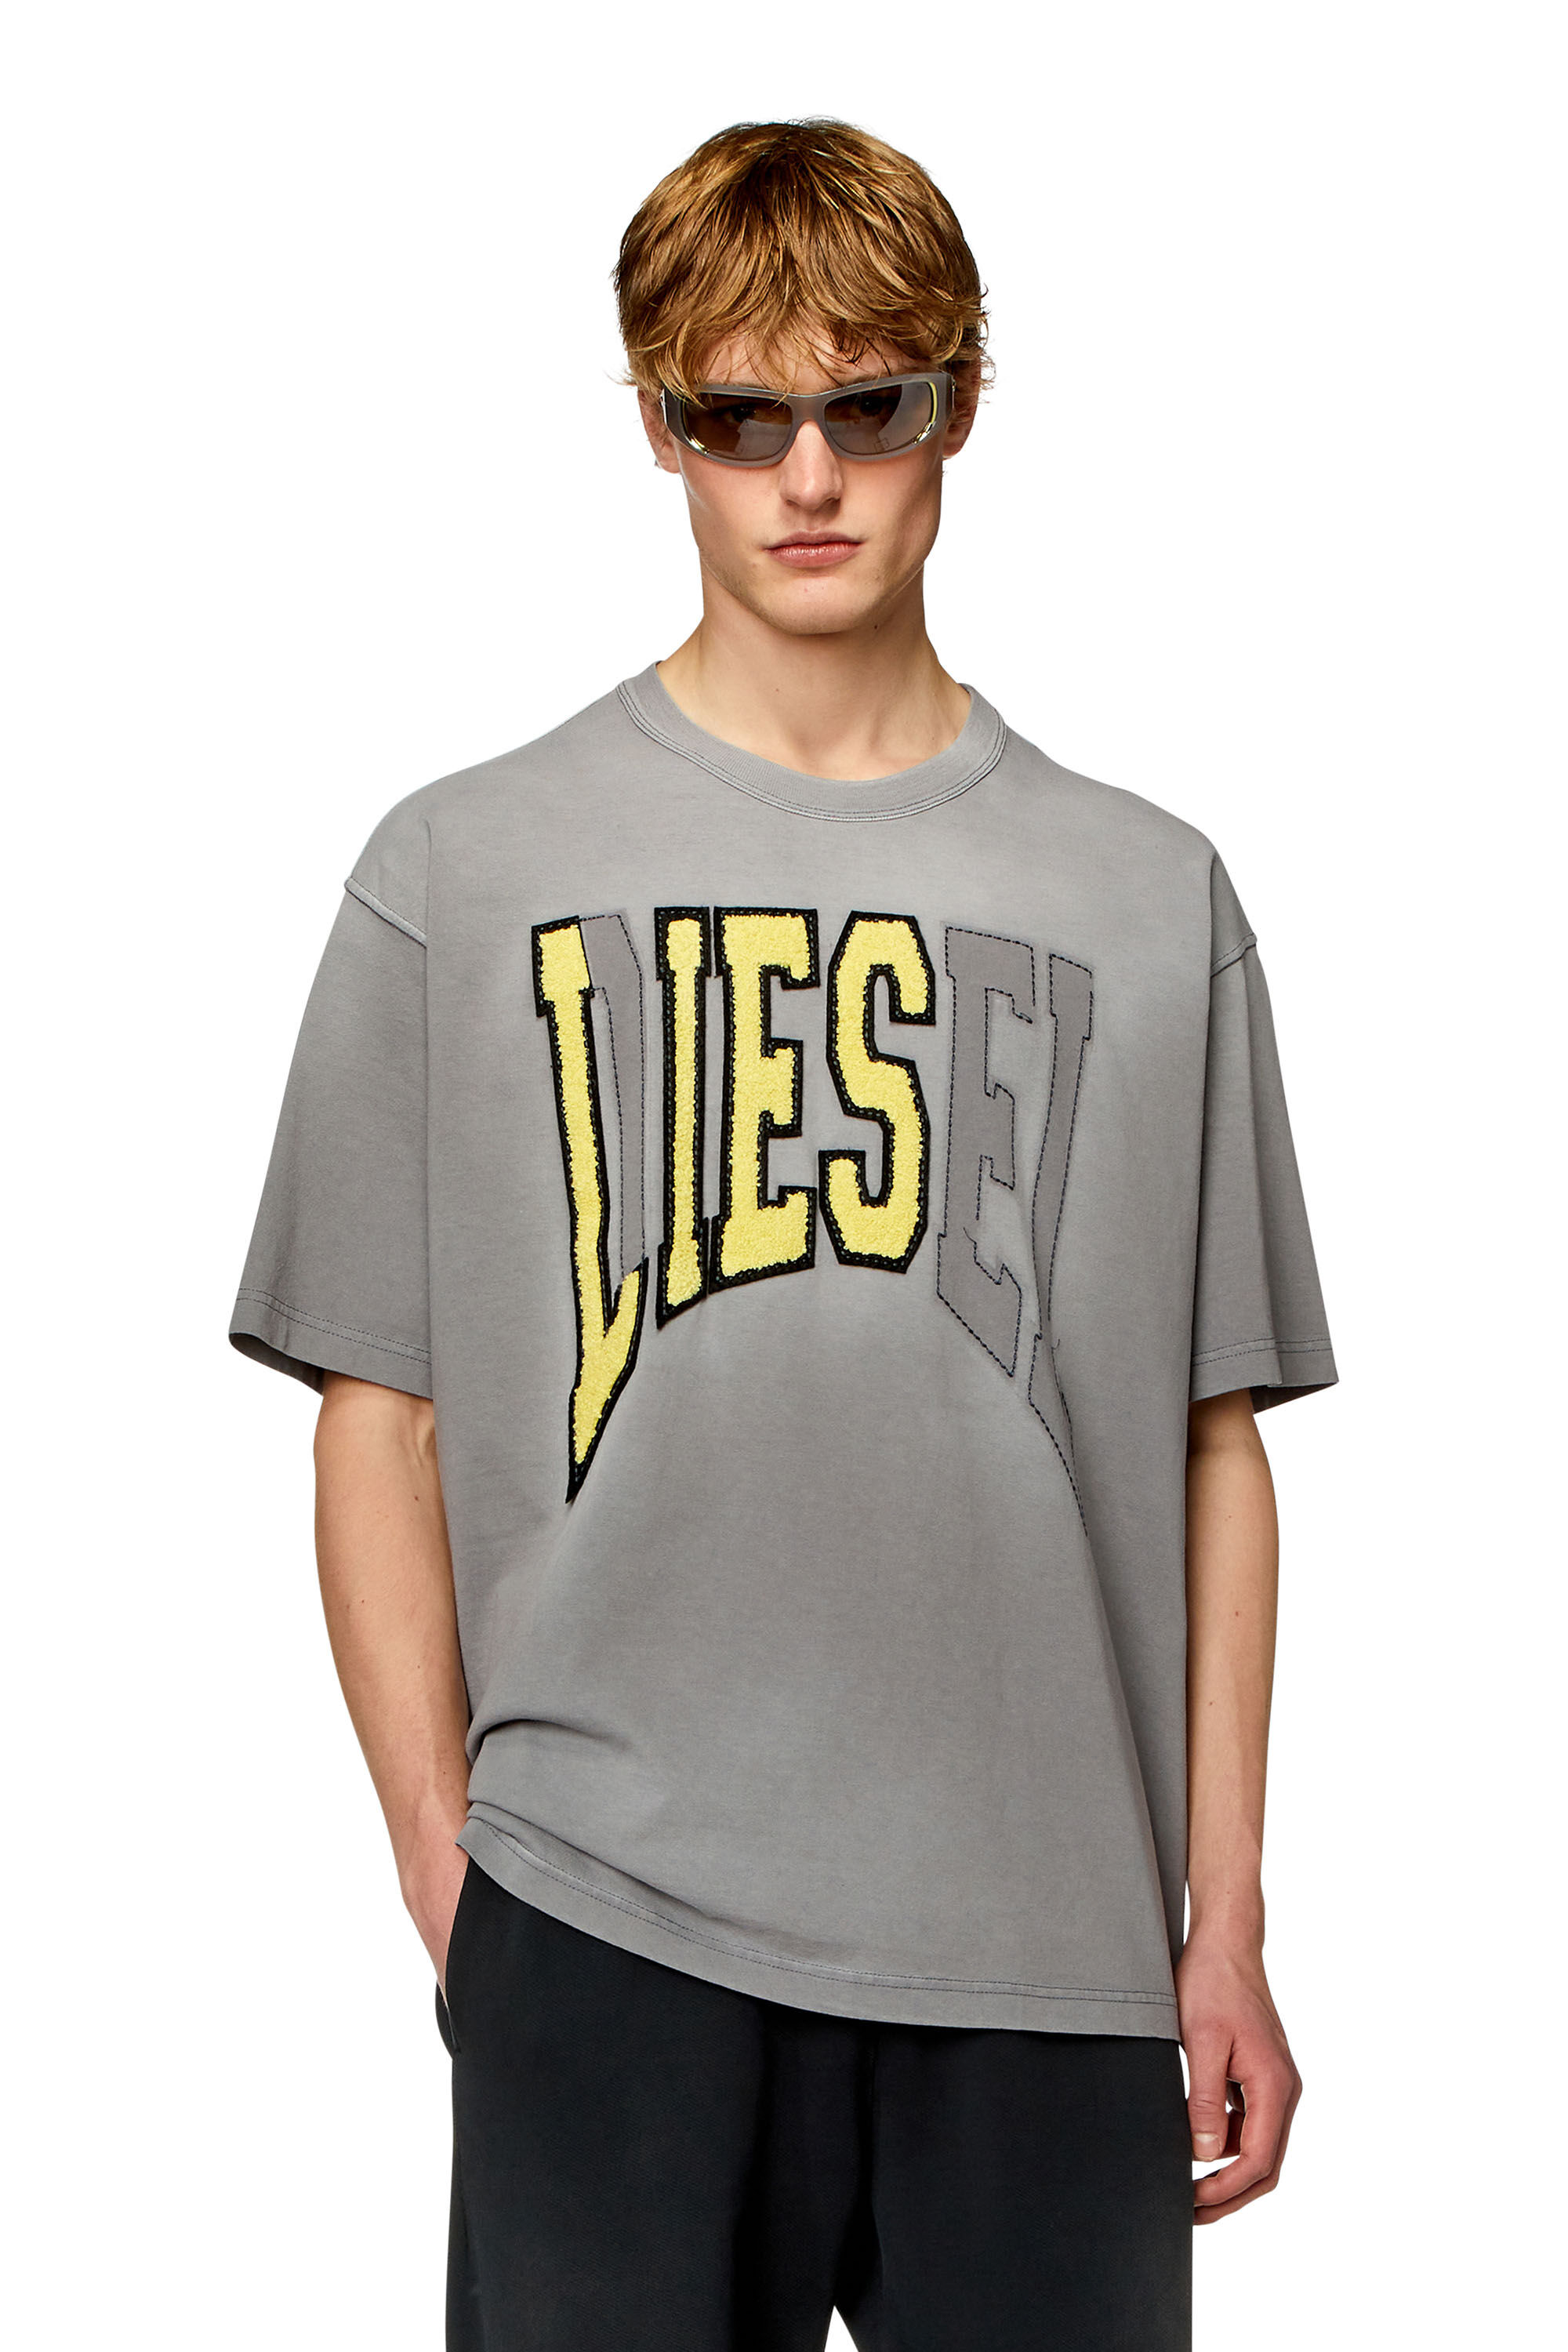 Diesel - T-WASH-N, Hombre Camiseta extragrande con logotipo Diesel Lies in Gris - Image 3